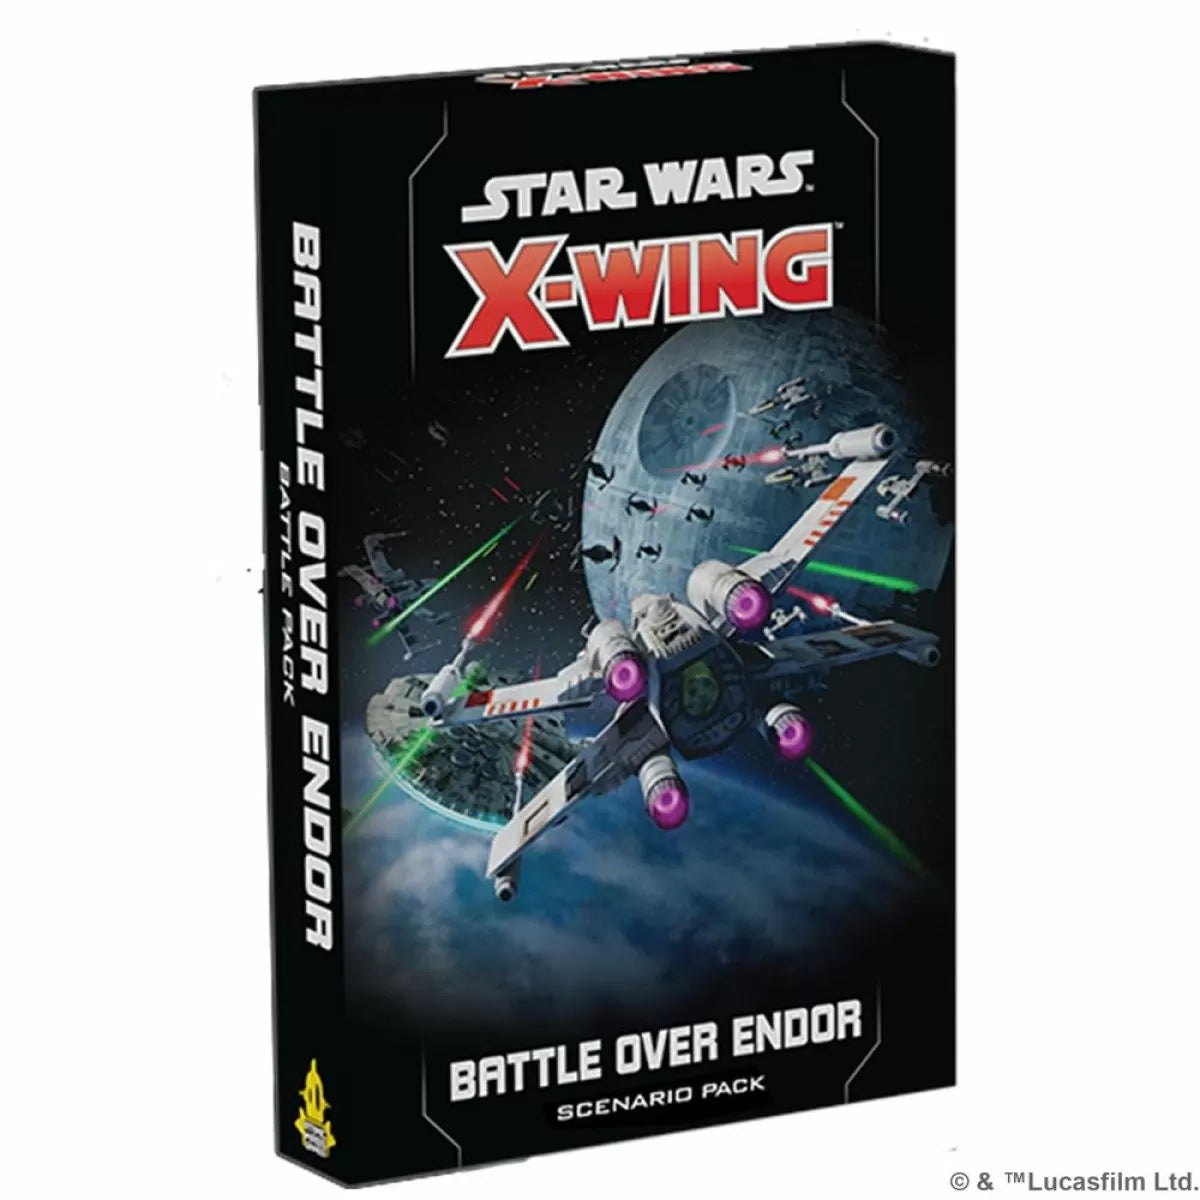 Star Wars X-wing 2E: Battle Over Endor Scenario Pack